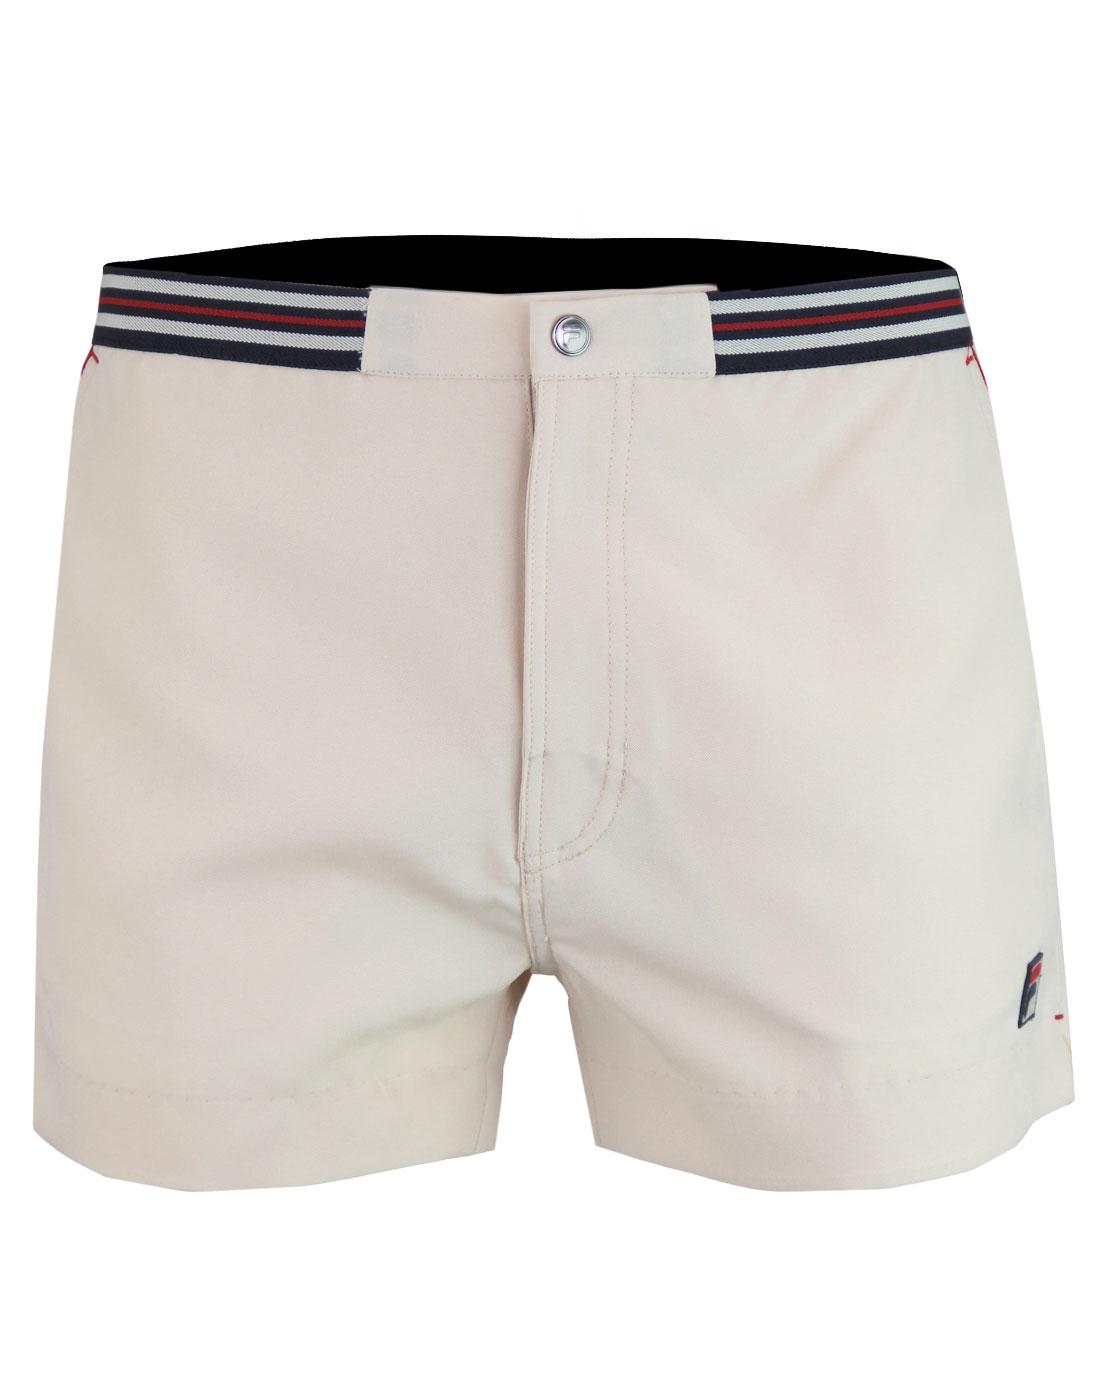 70s tennis shorts